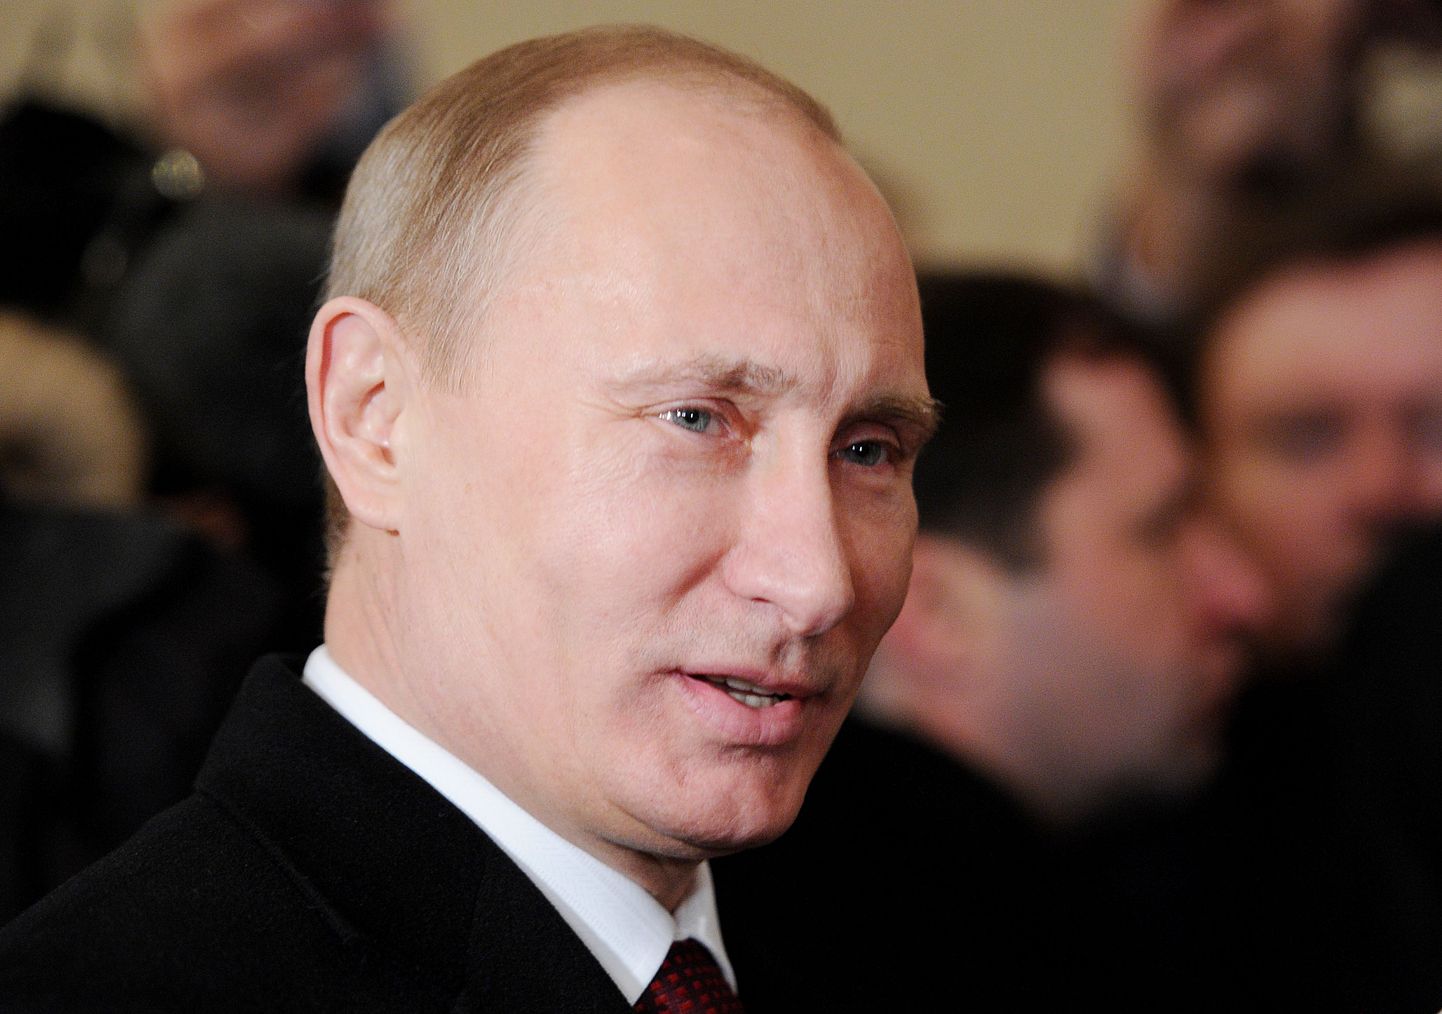 Vene peaminister Vladimir Putin